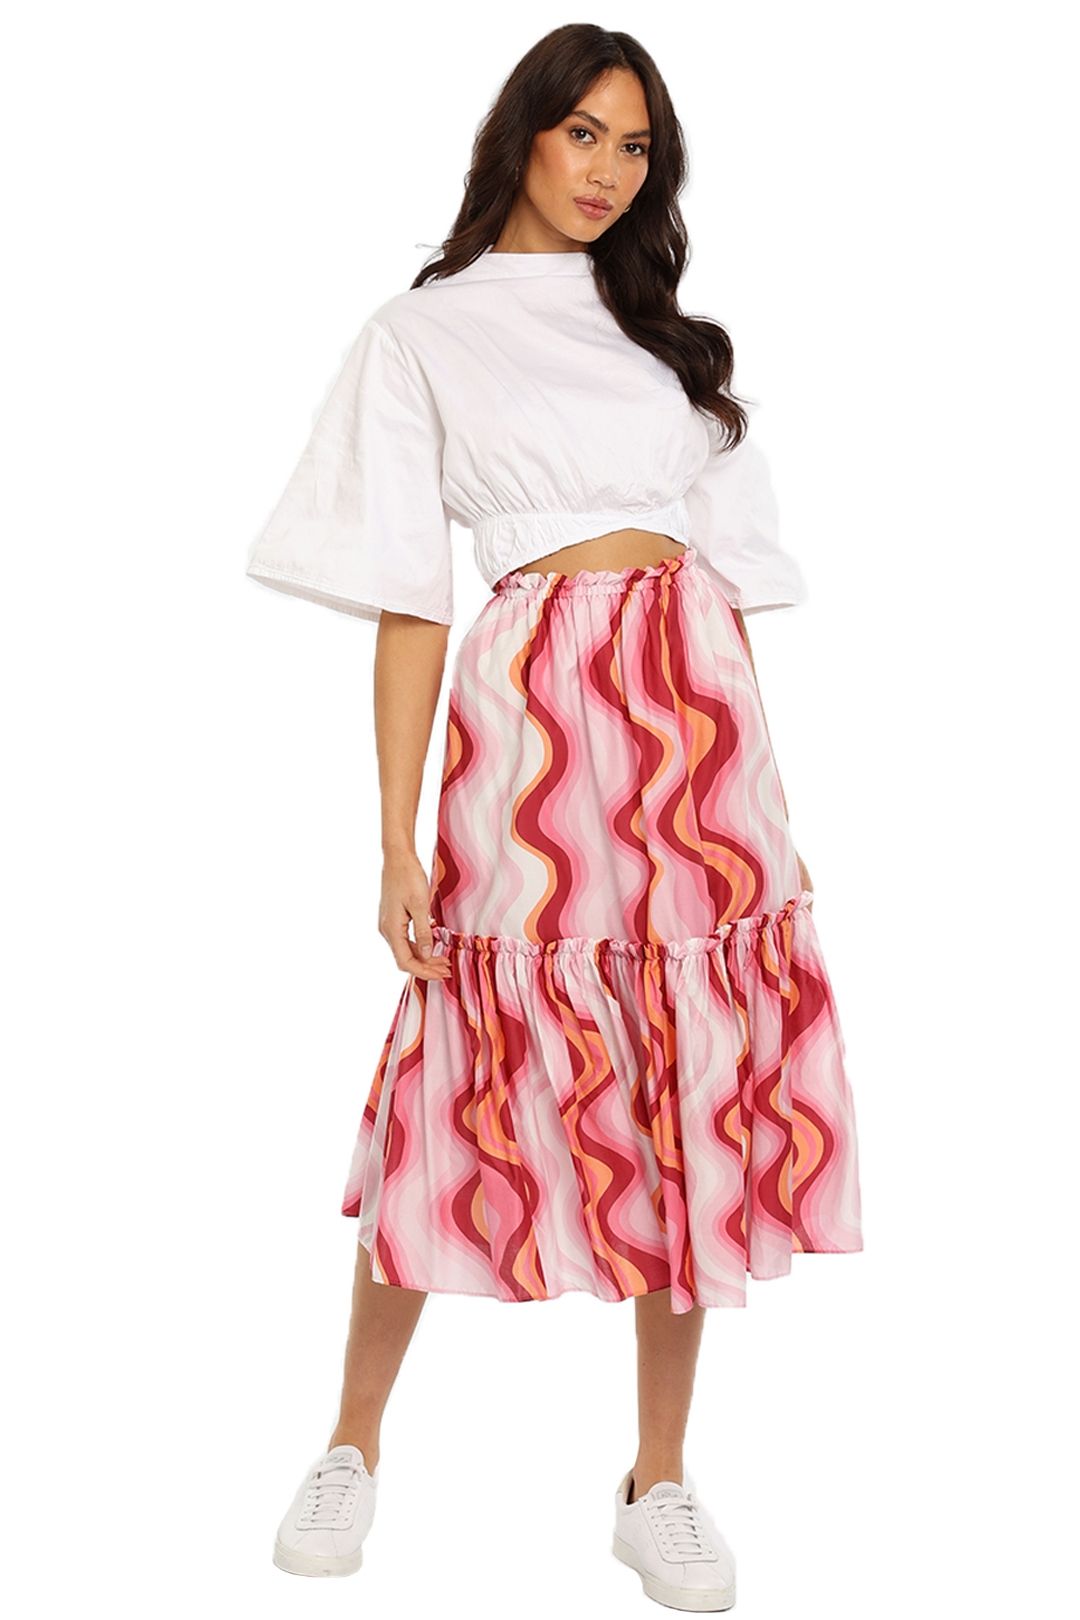 Steele Austin Skirt pink print